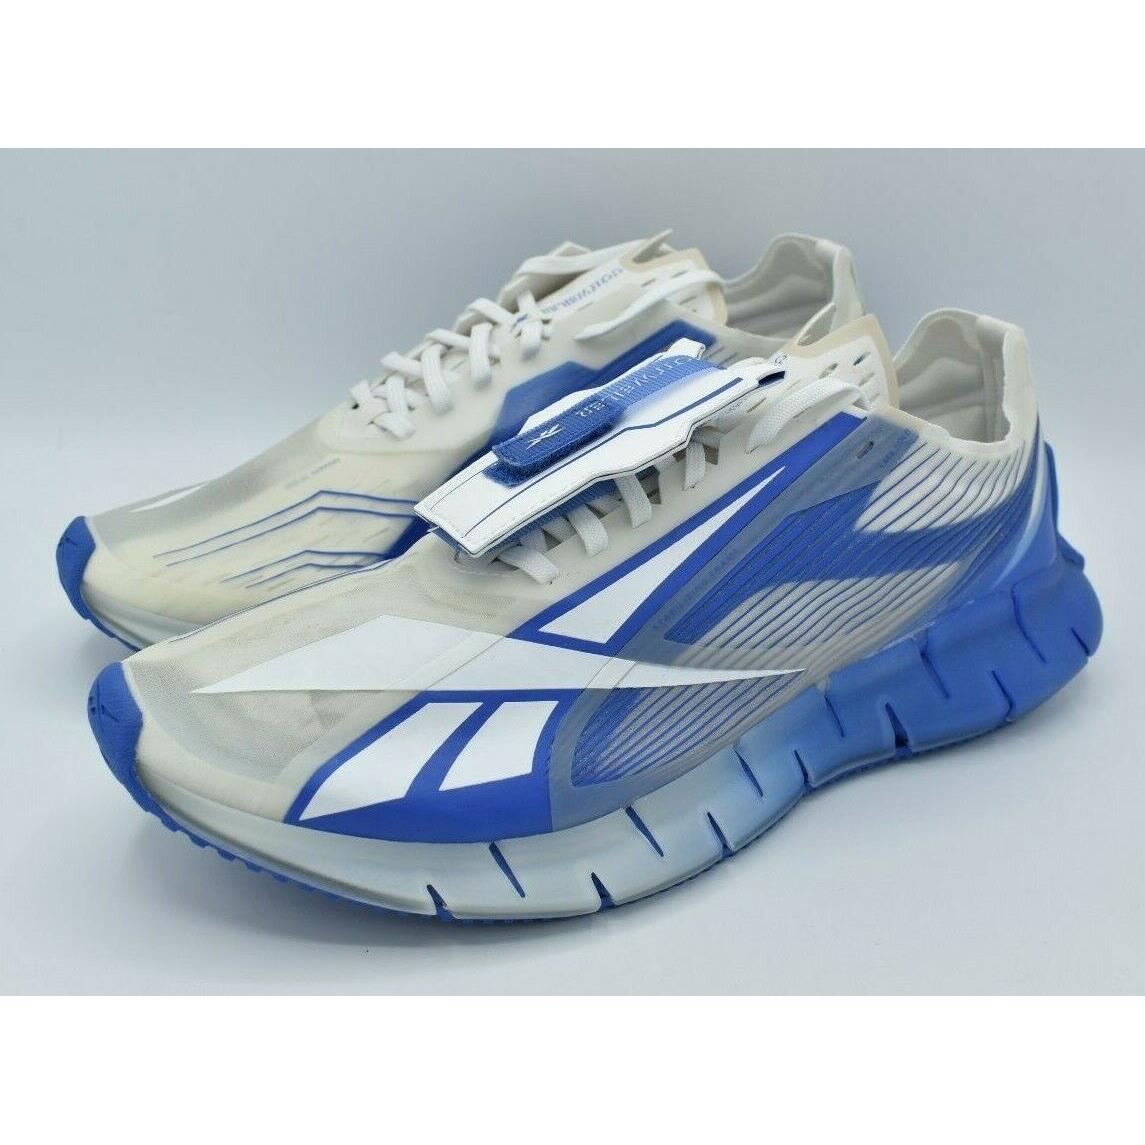 Reebok Mens Size 9.5 Cottweiler Zig 3D Storm X White Blue Blast Running Shoes